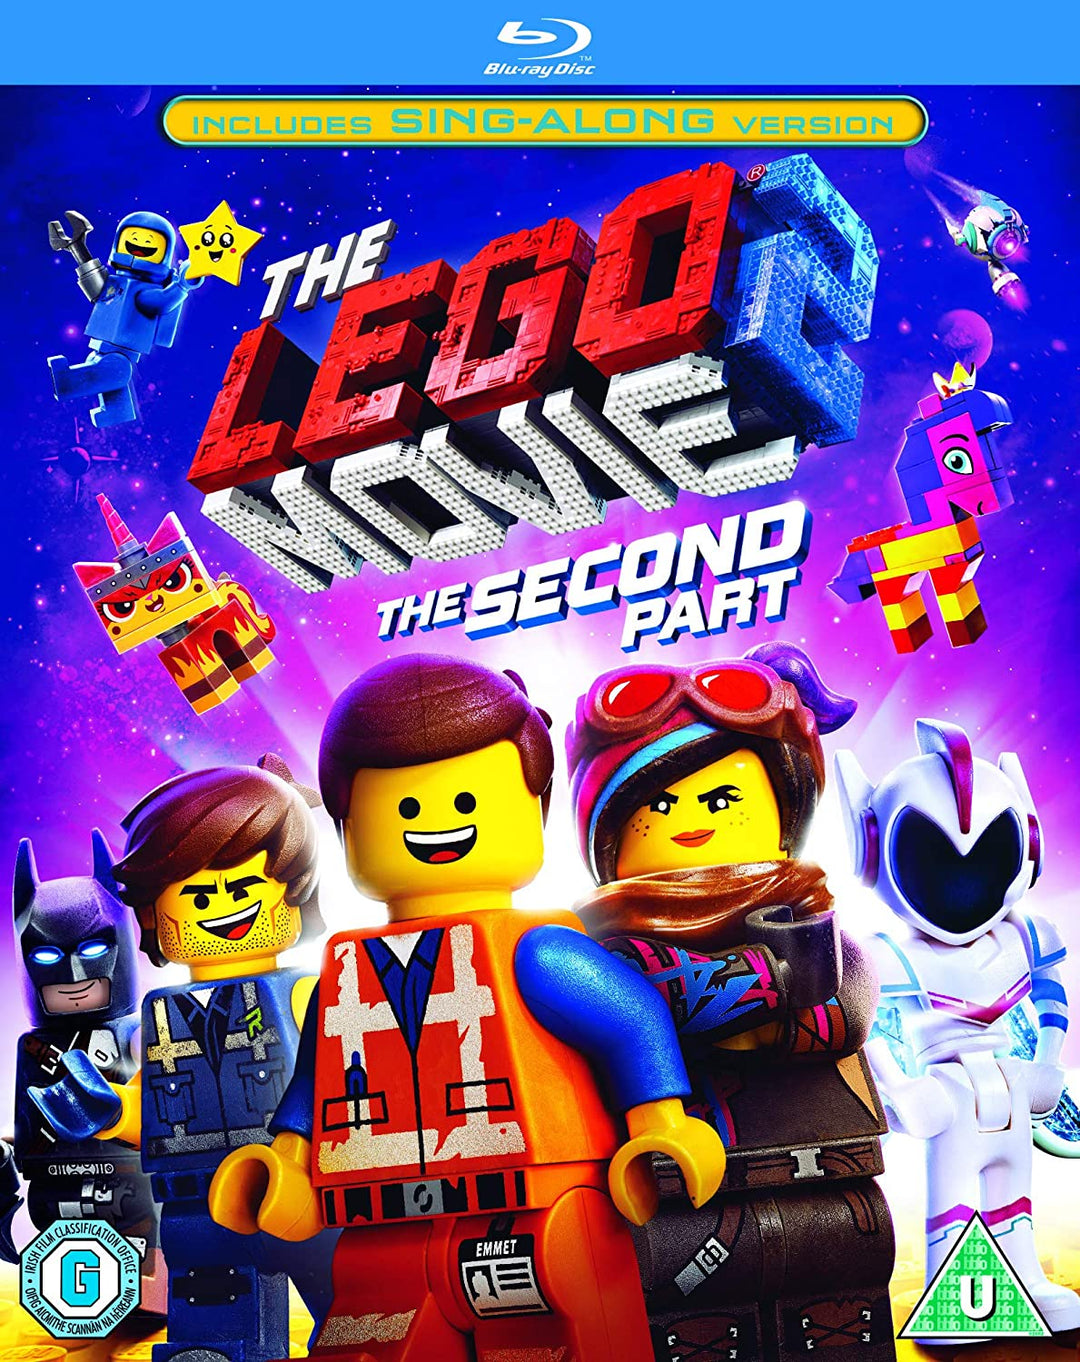 The LEGO Movie 2 [2019] - Family/Comedy [Blu-Ray]